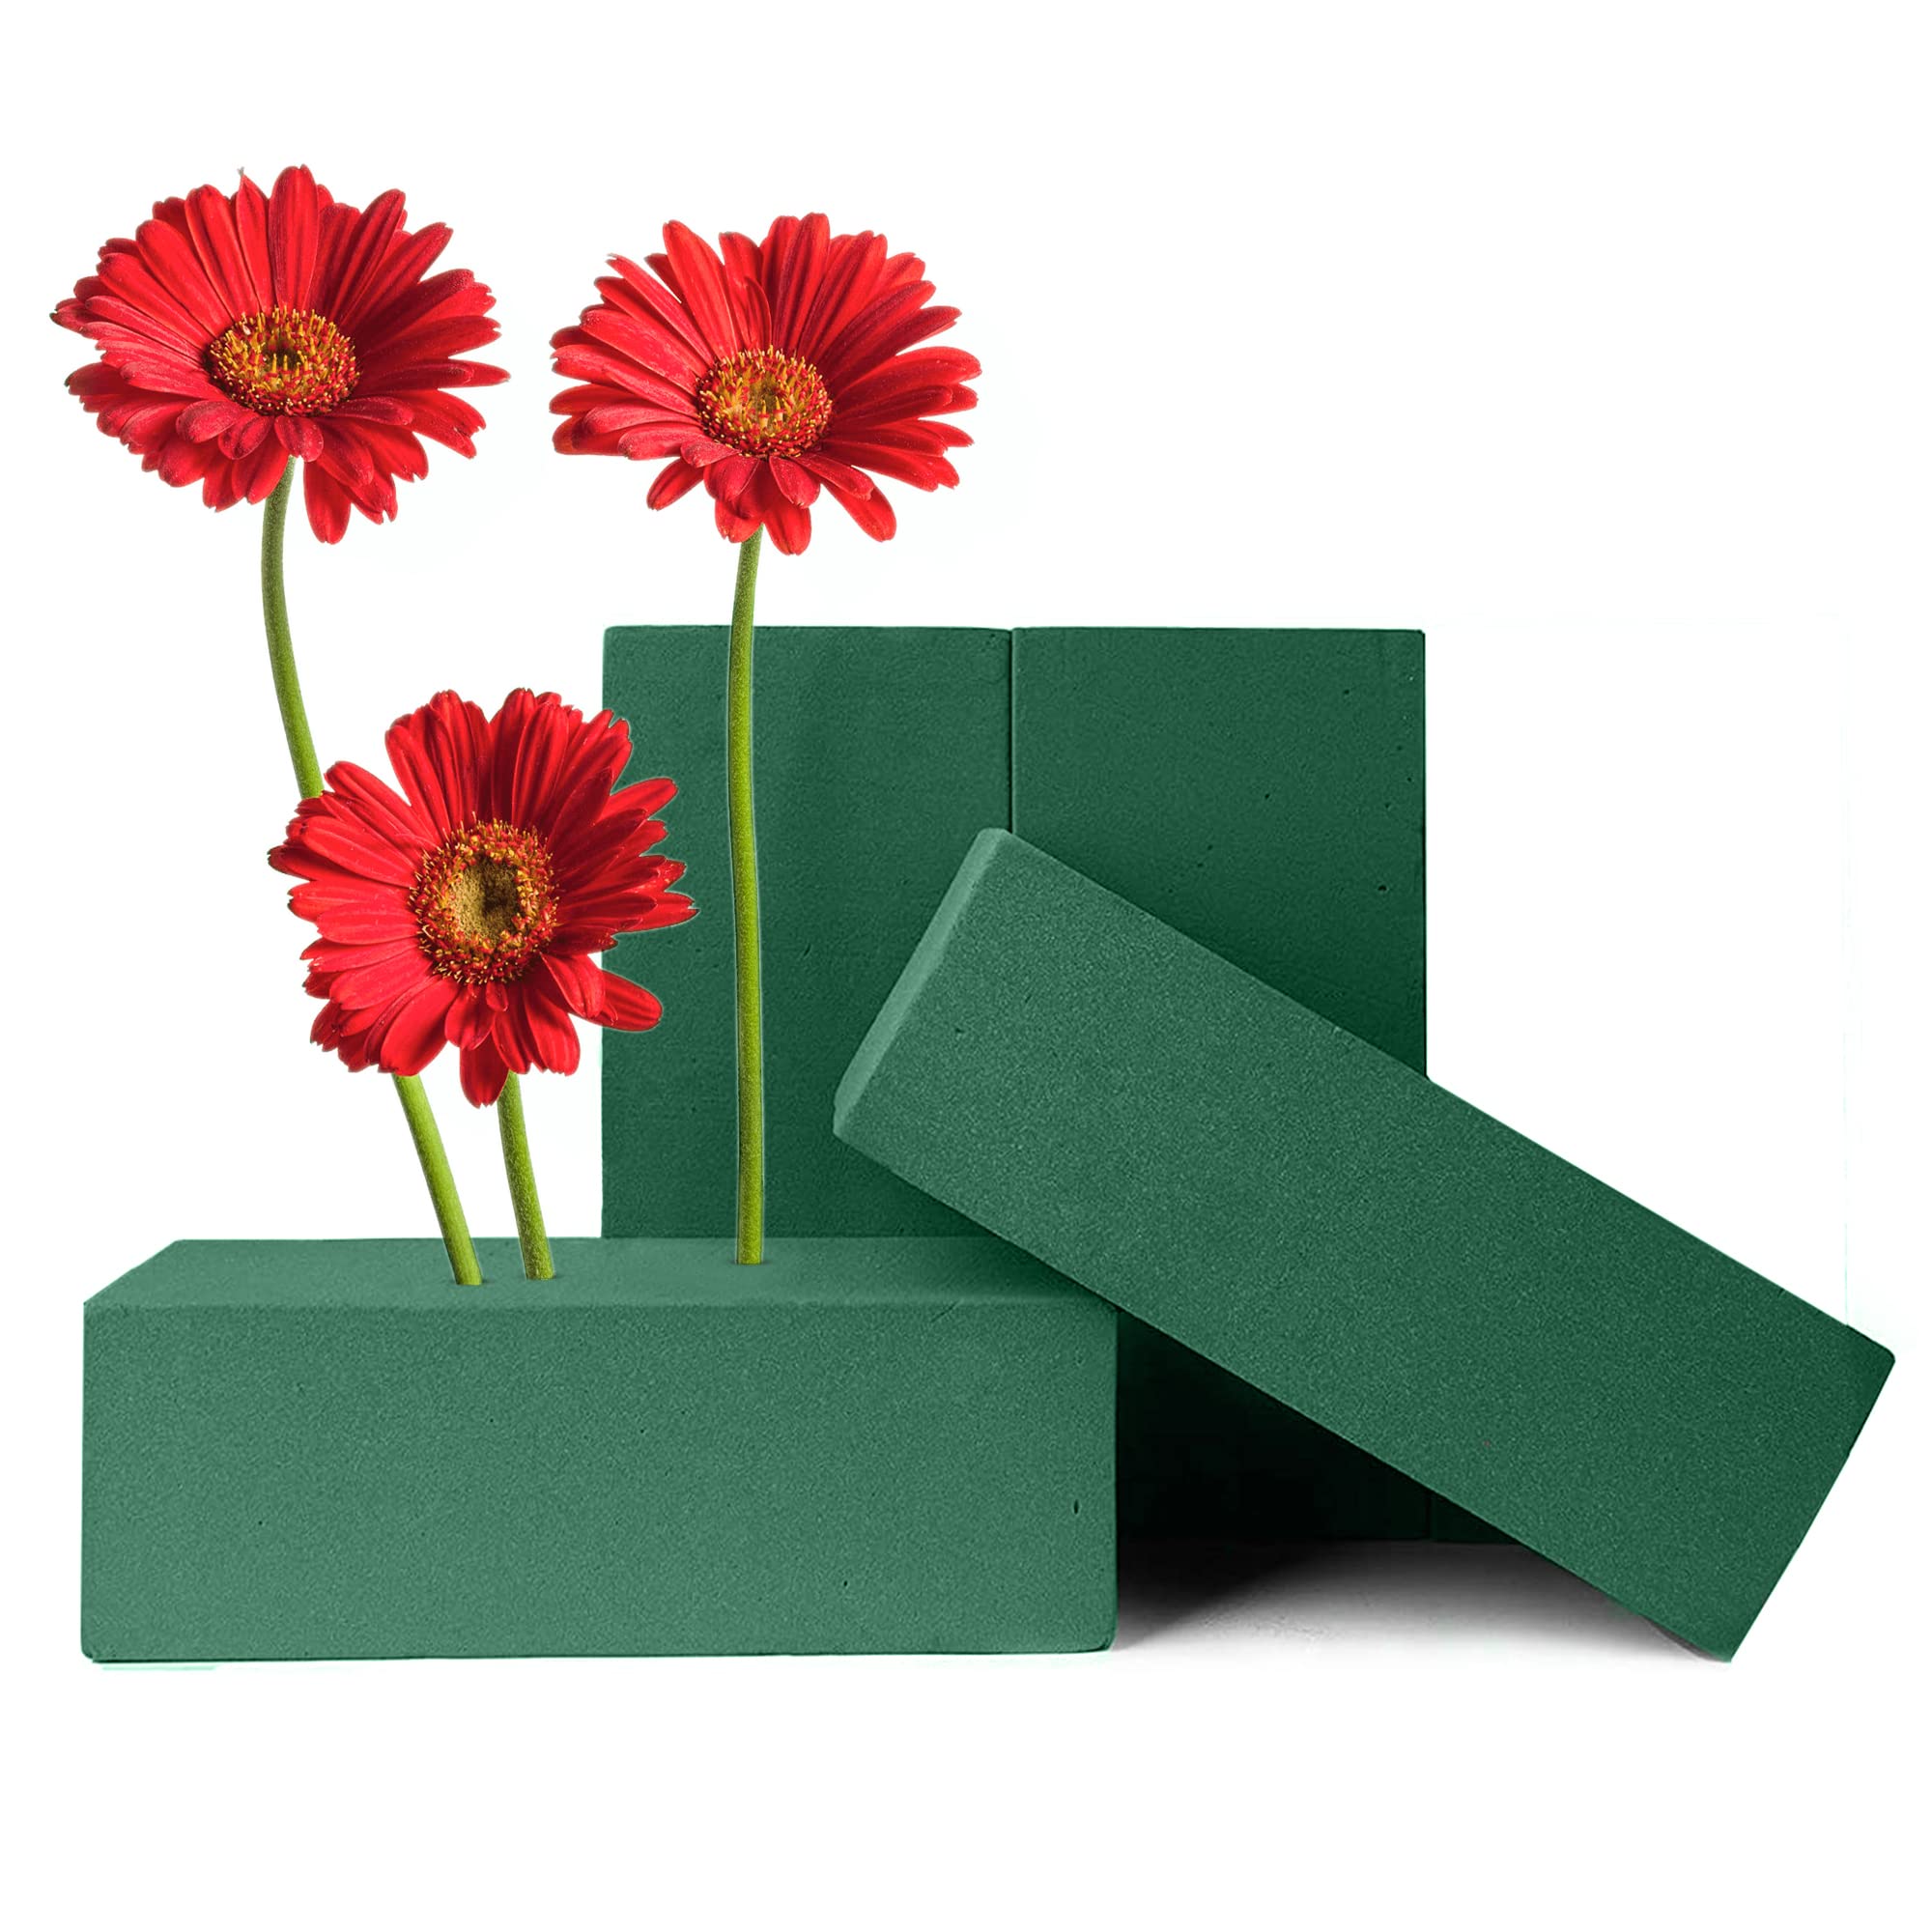 6 Pack Floral Foam Blocks - Wet Foam Bricks for Florists, Crafts, Fresh  Flower Arrangements (9 x 4 x 3 In, Green)